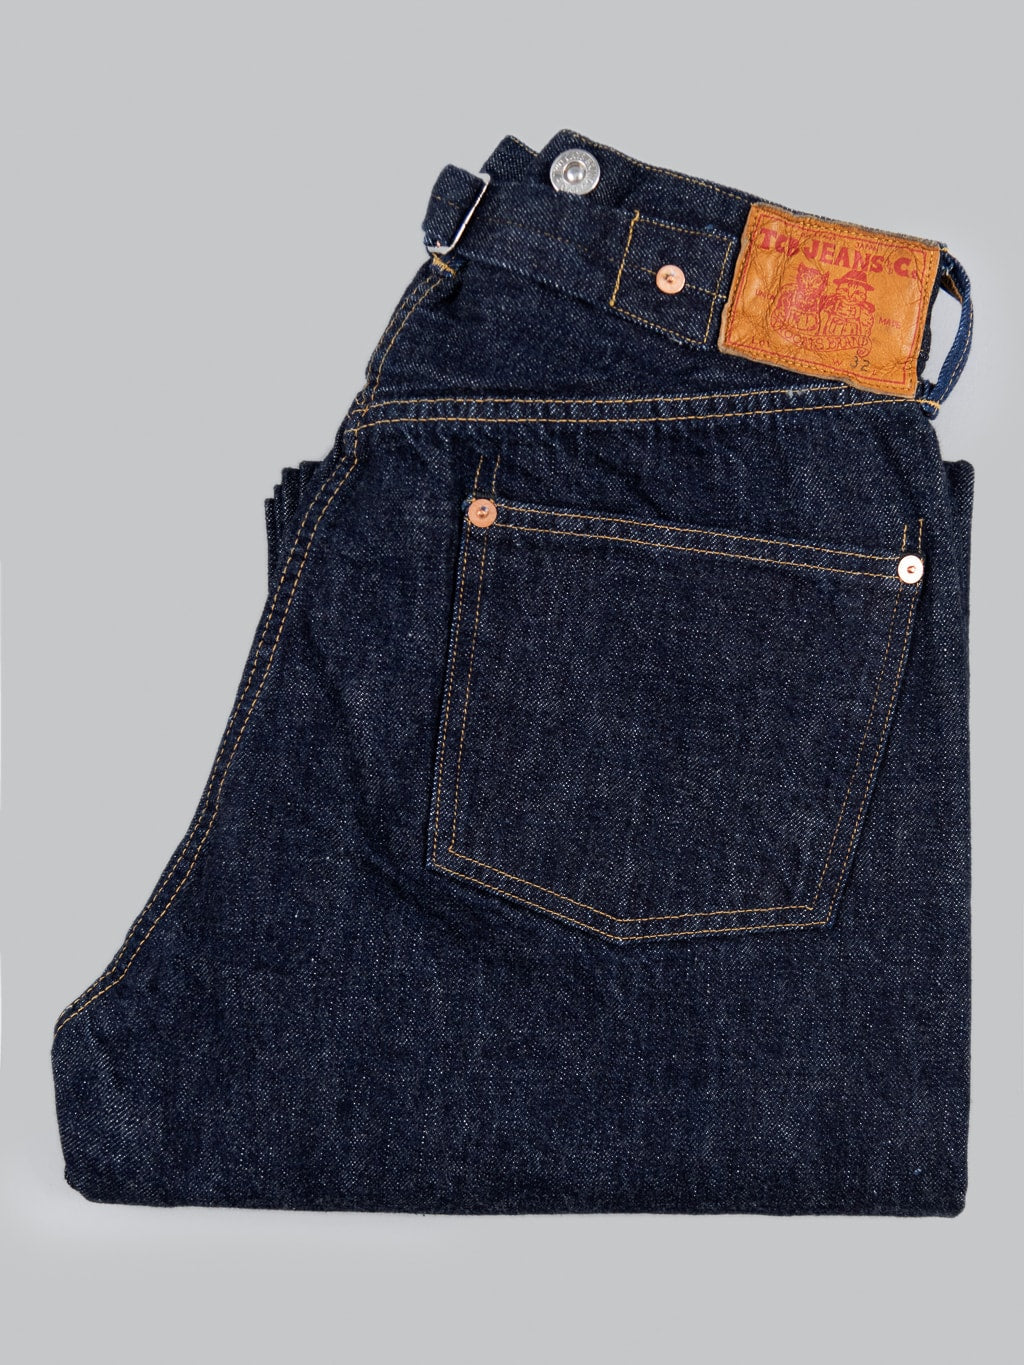 TCB 20s indigo Jeans one wash vintage style 12.5oz